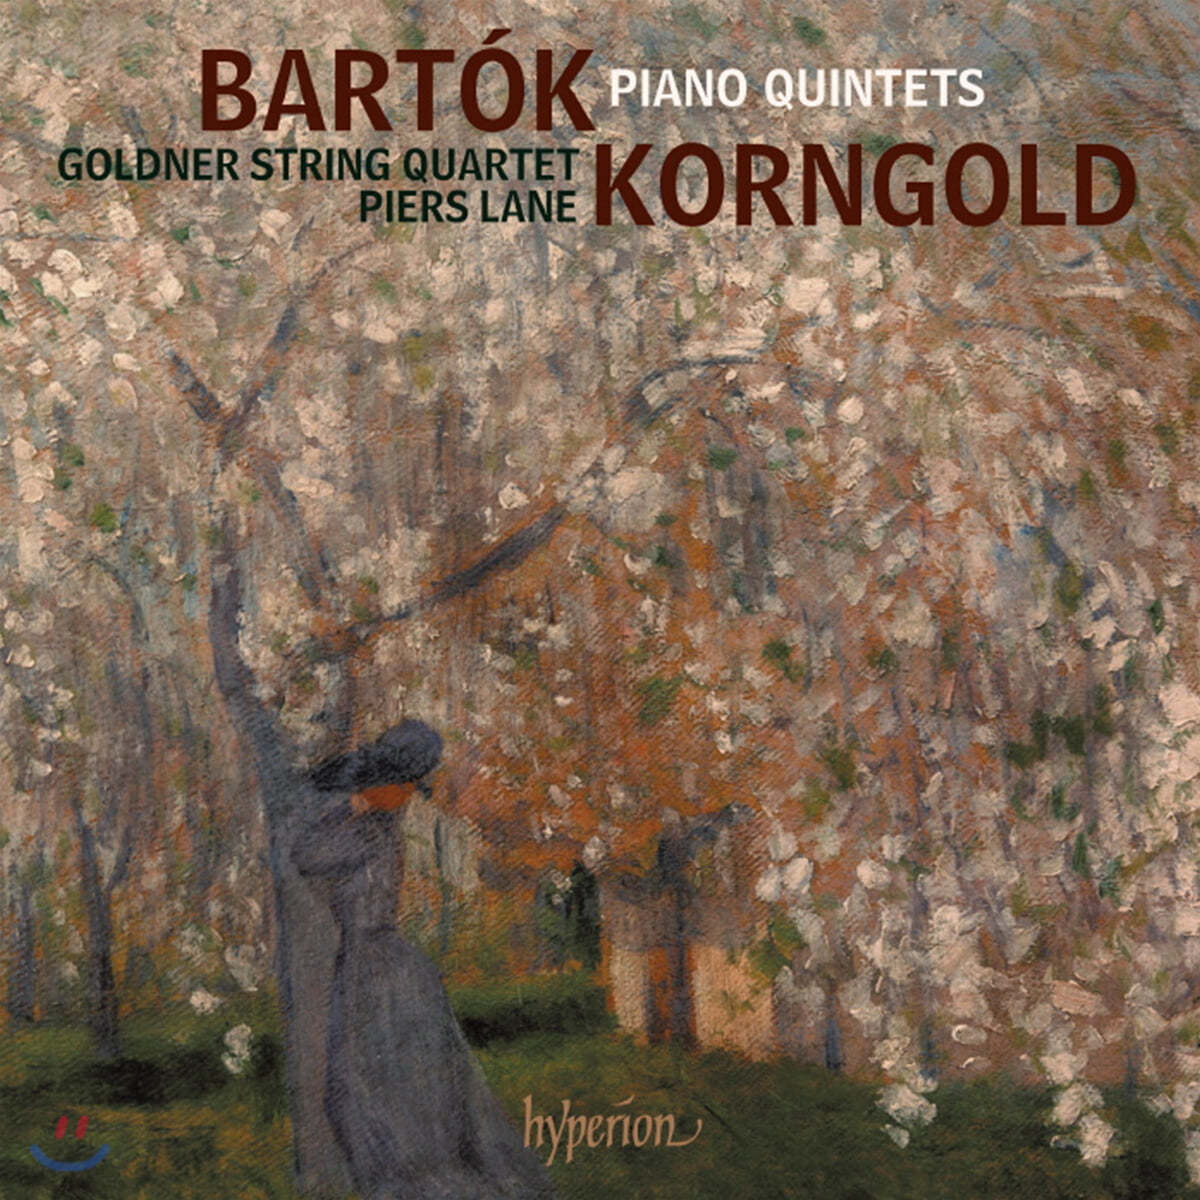 Piers Lane 바르토크 / 코른골트: 피아노 오중주 (Bartok / Korngold: Piano Quintets)